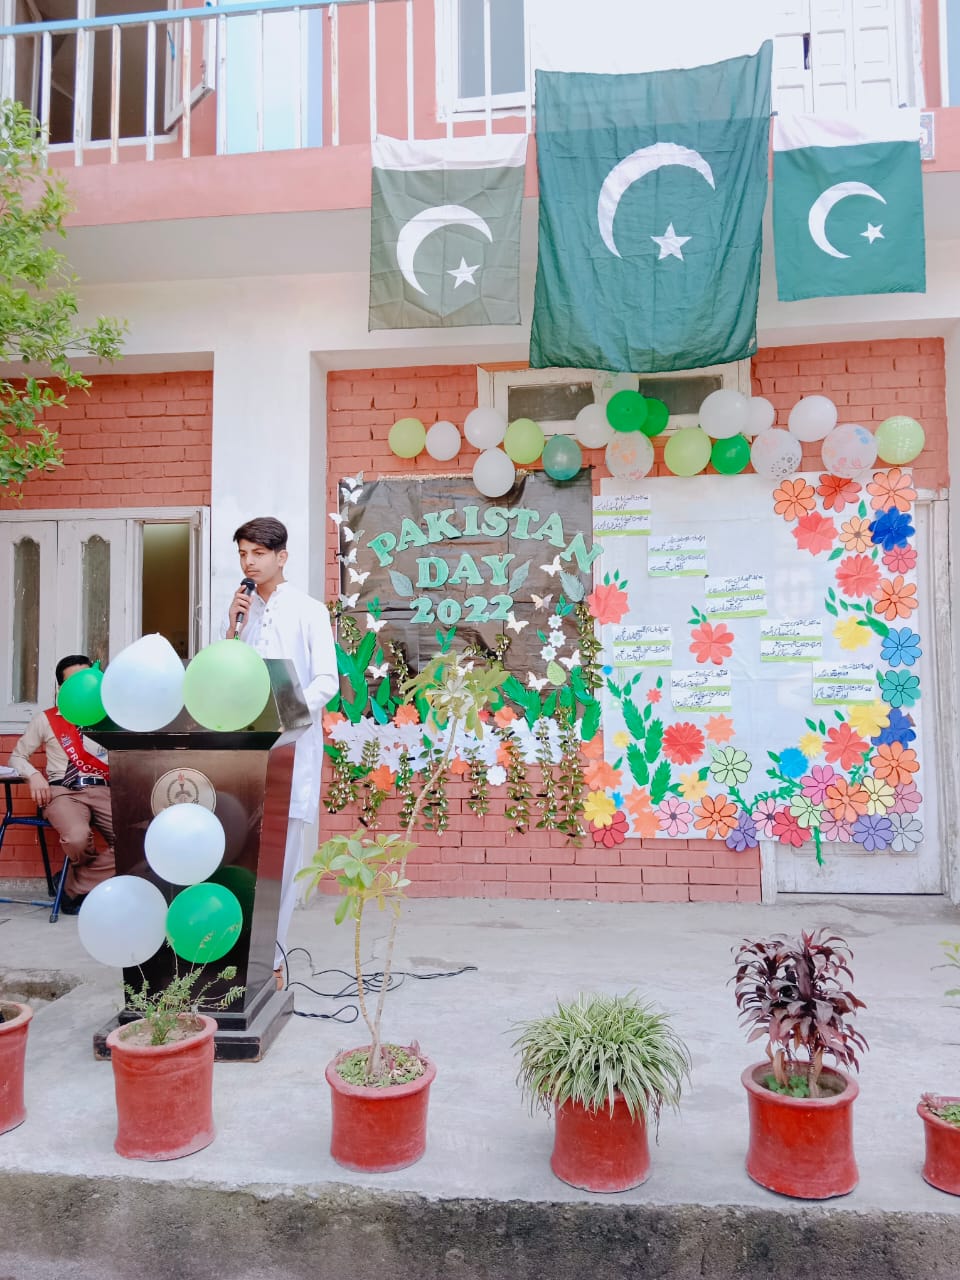 Pakistan Day 2022